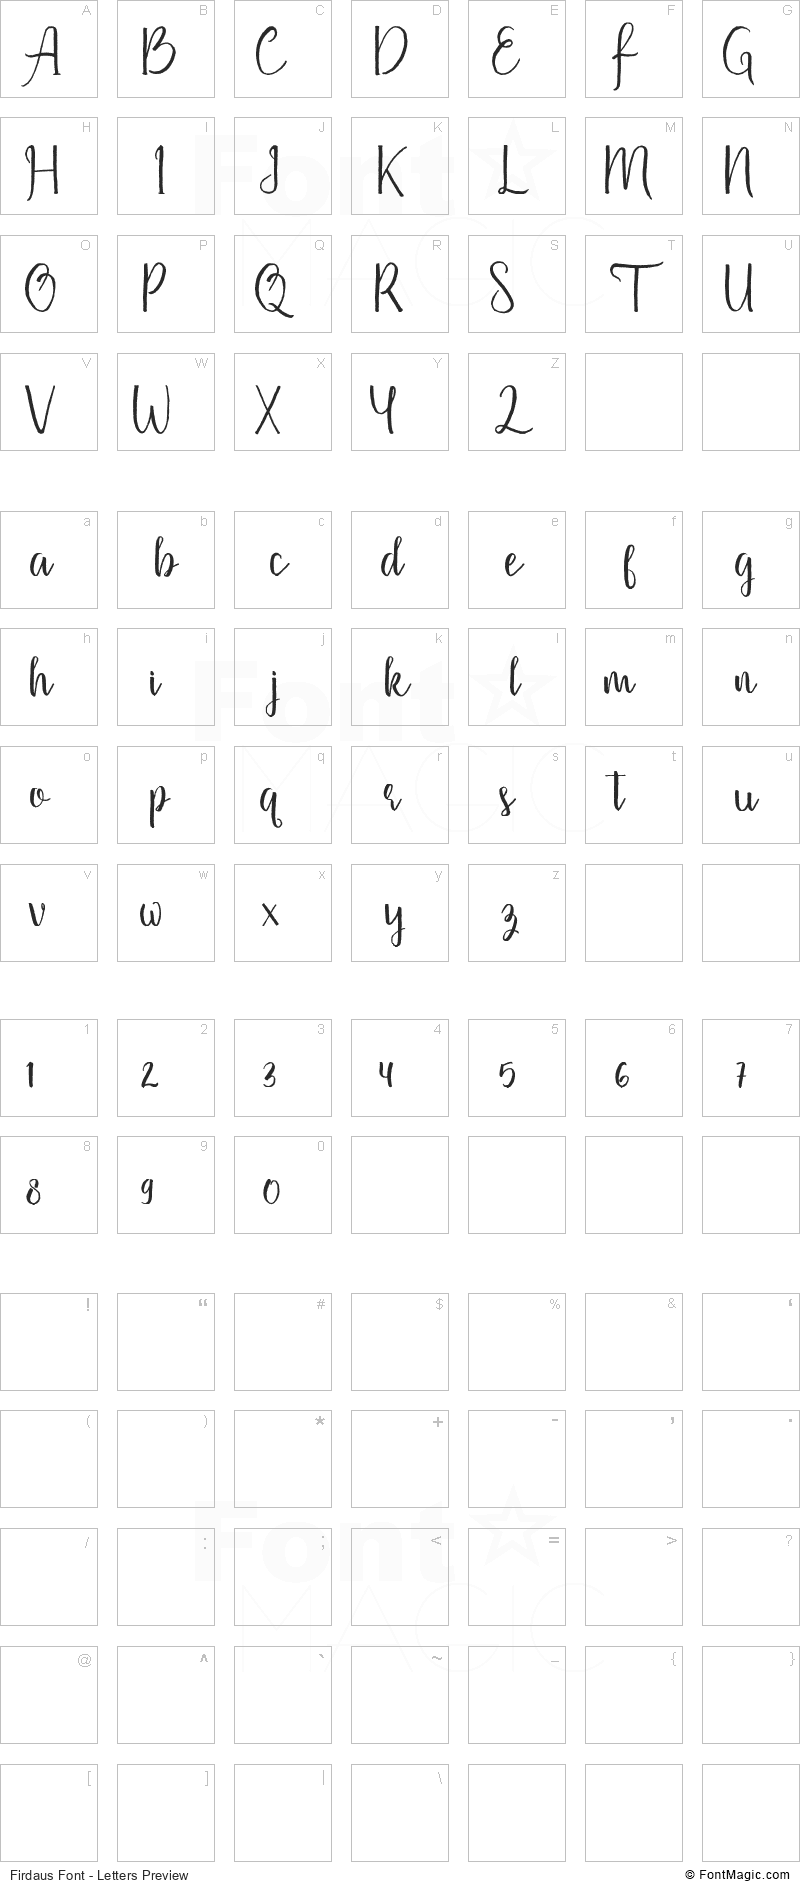 Firdaus Font - All Latters Preview Chart